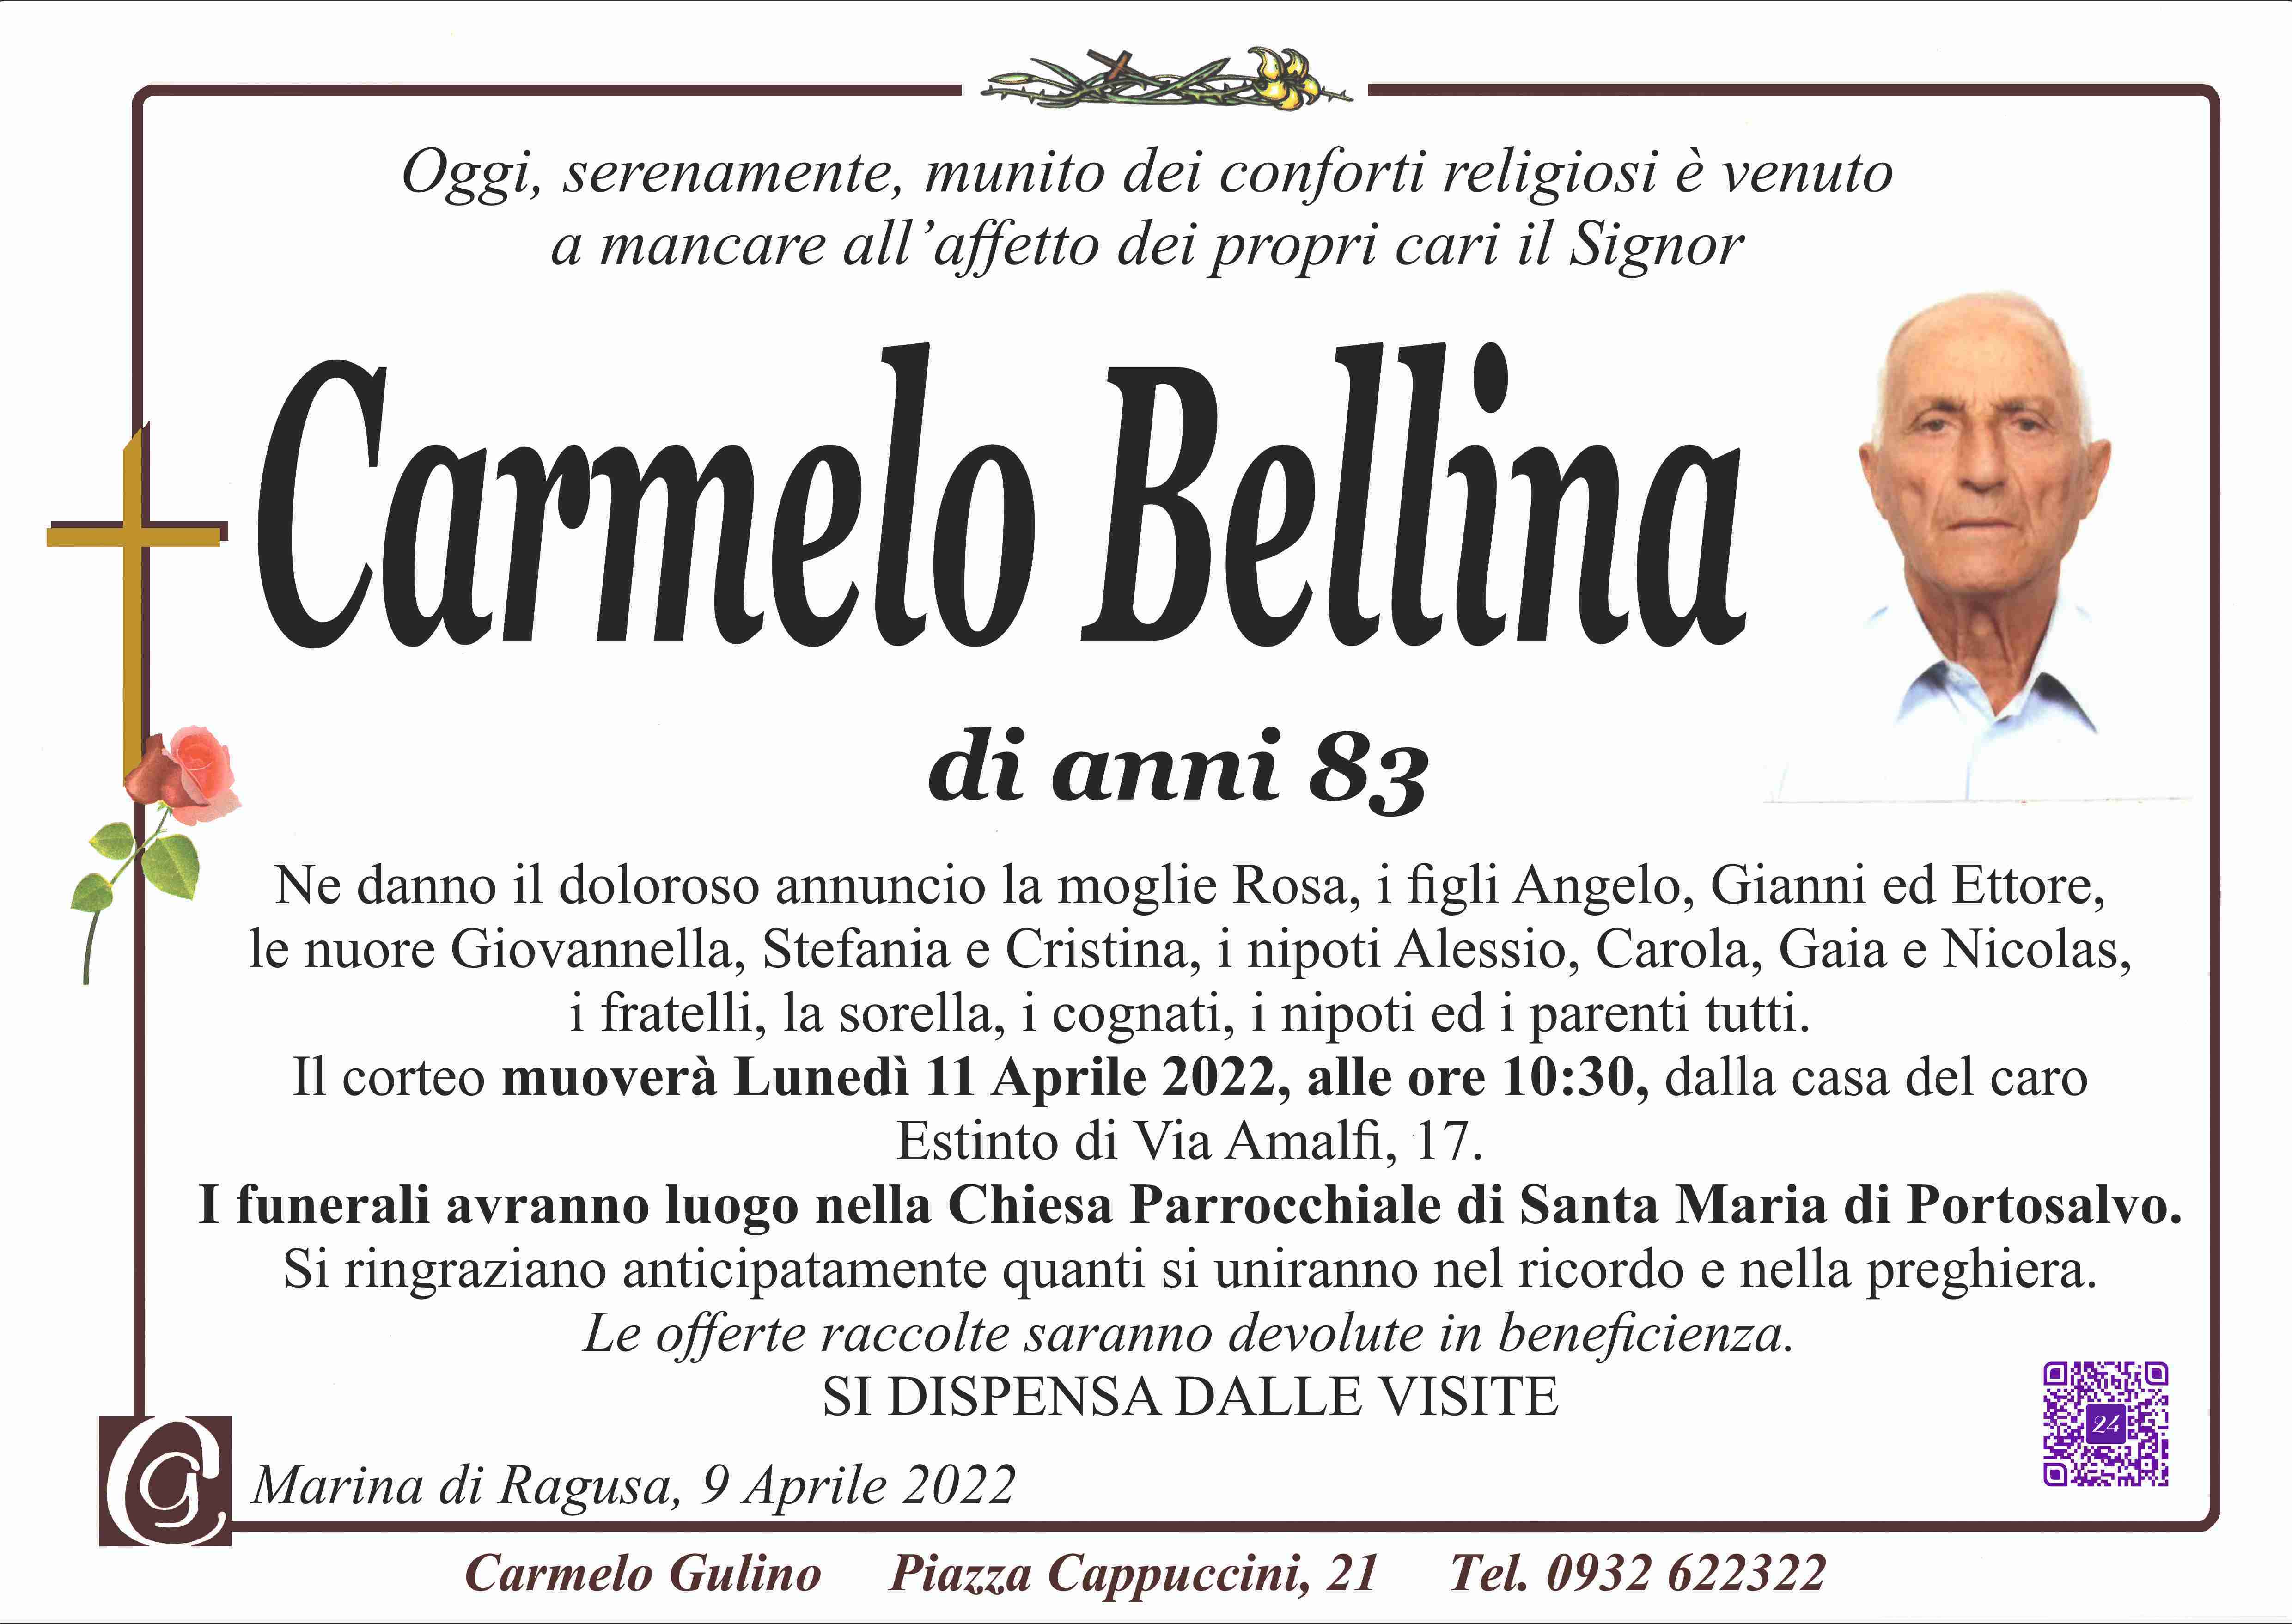 Carmelo Bellina